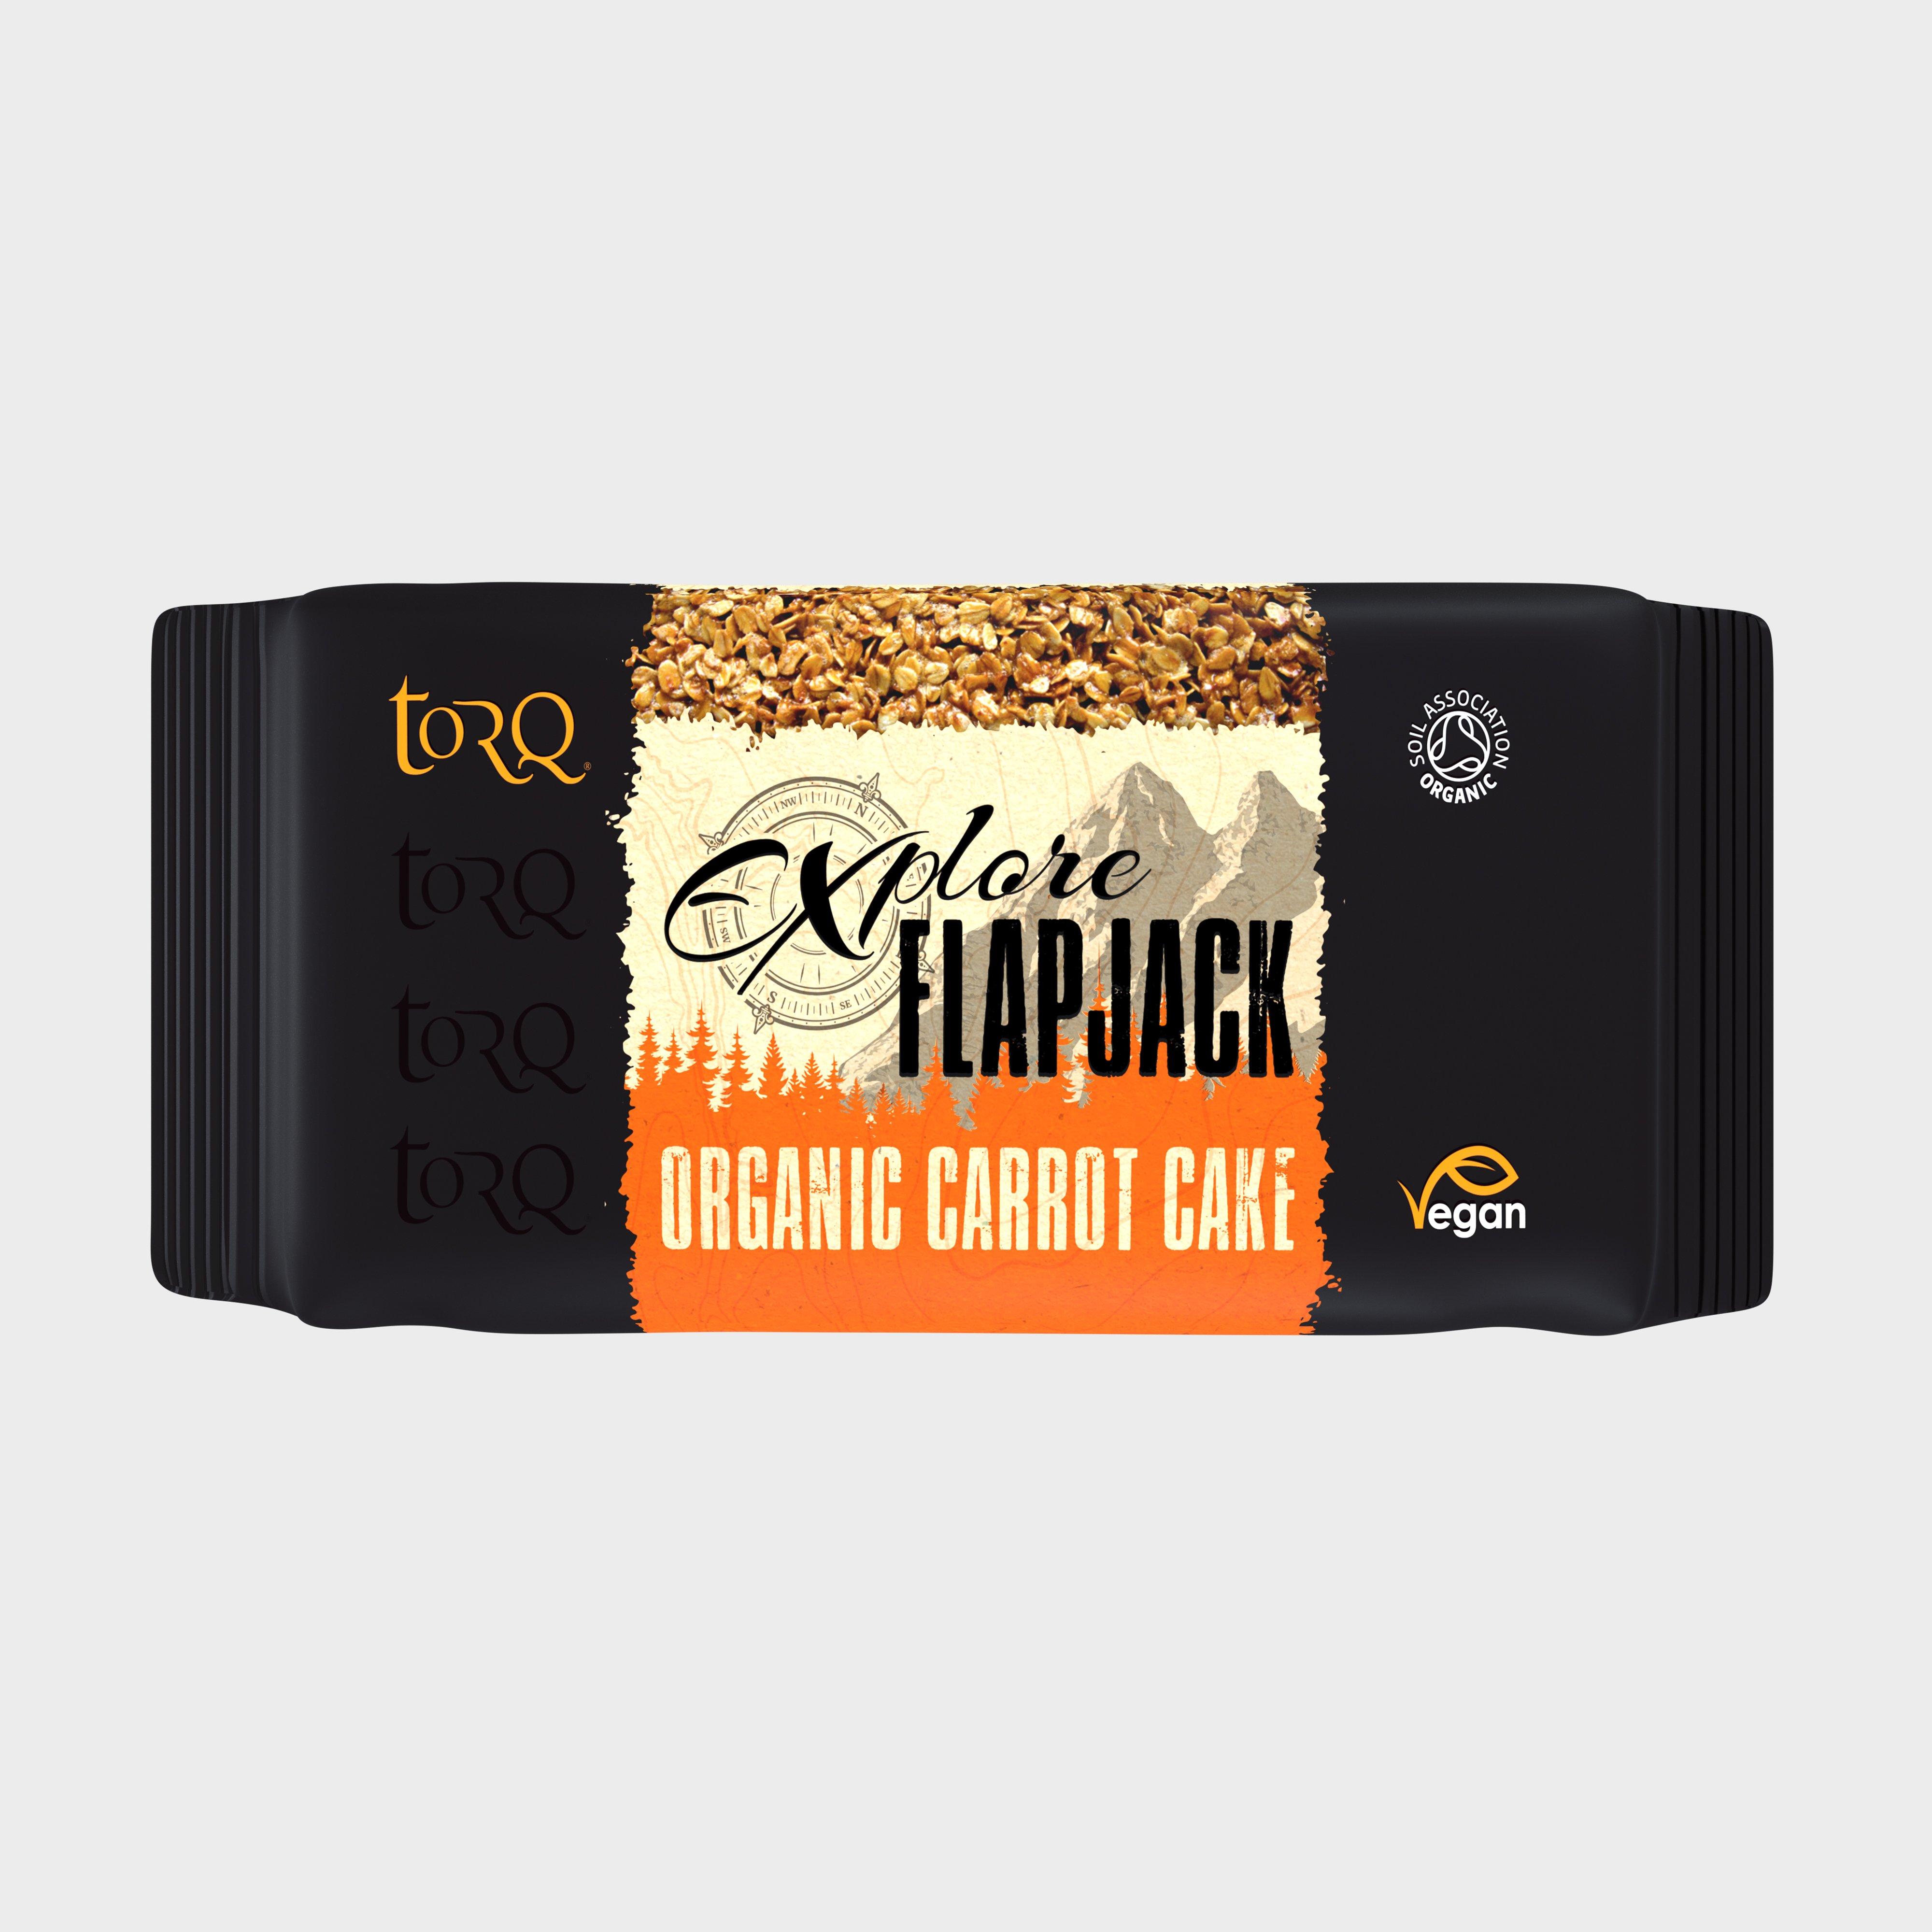 Image of Torq Explore Flapjack Organic Ginger Cake - Black/Carrot, Black/CARROT